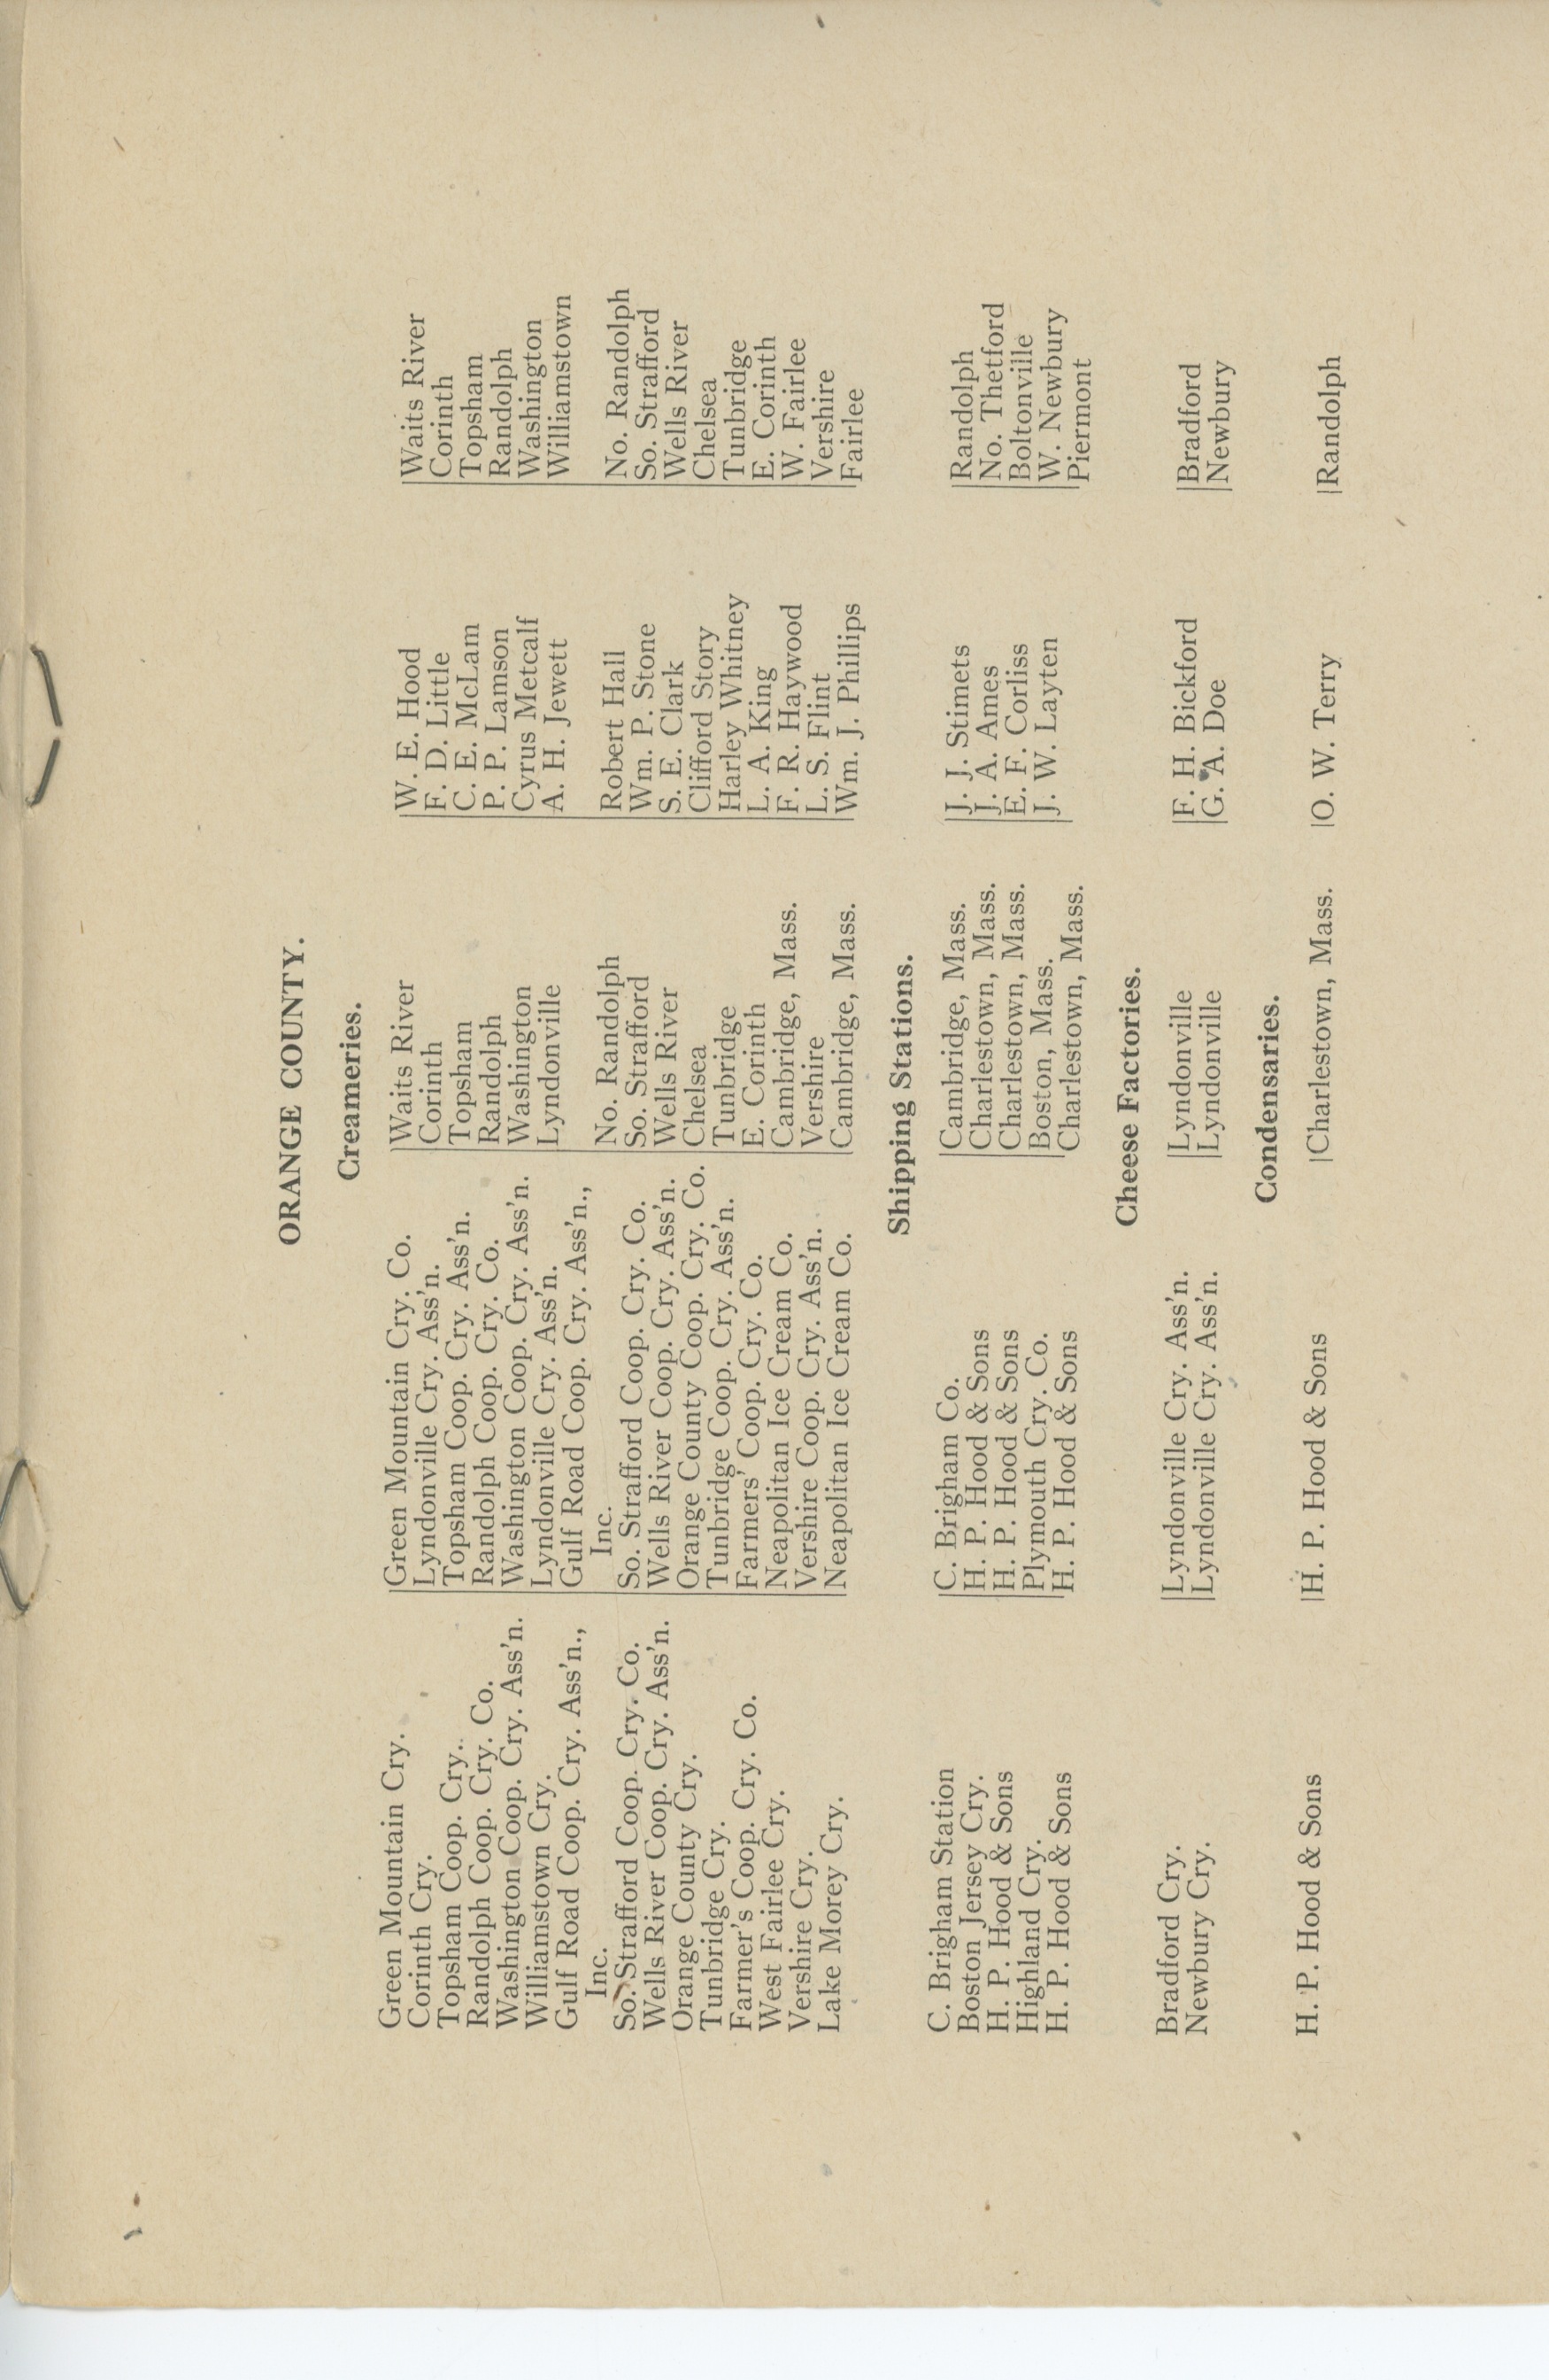 ced-1921-statedepartment-list of creameriespg6.jpeg